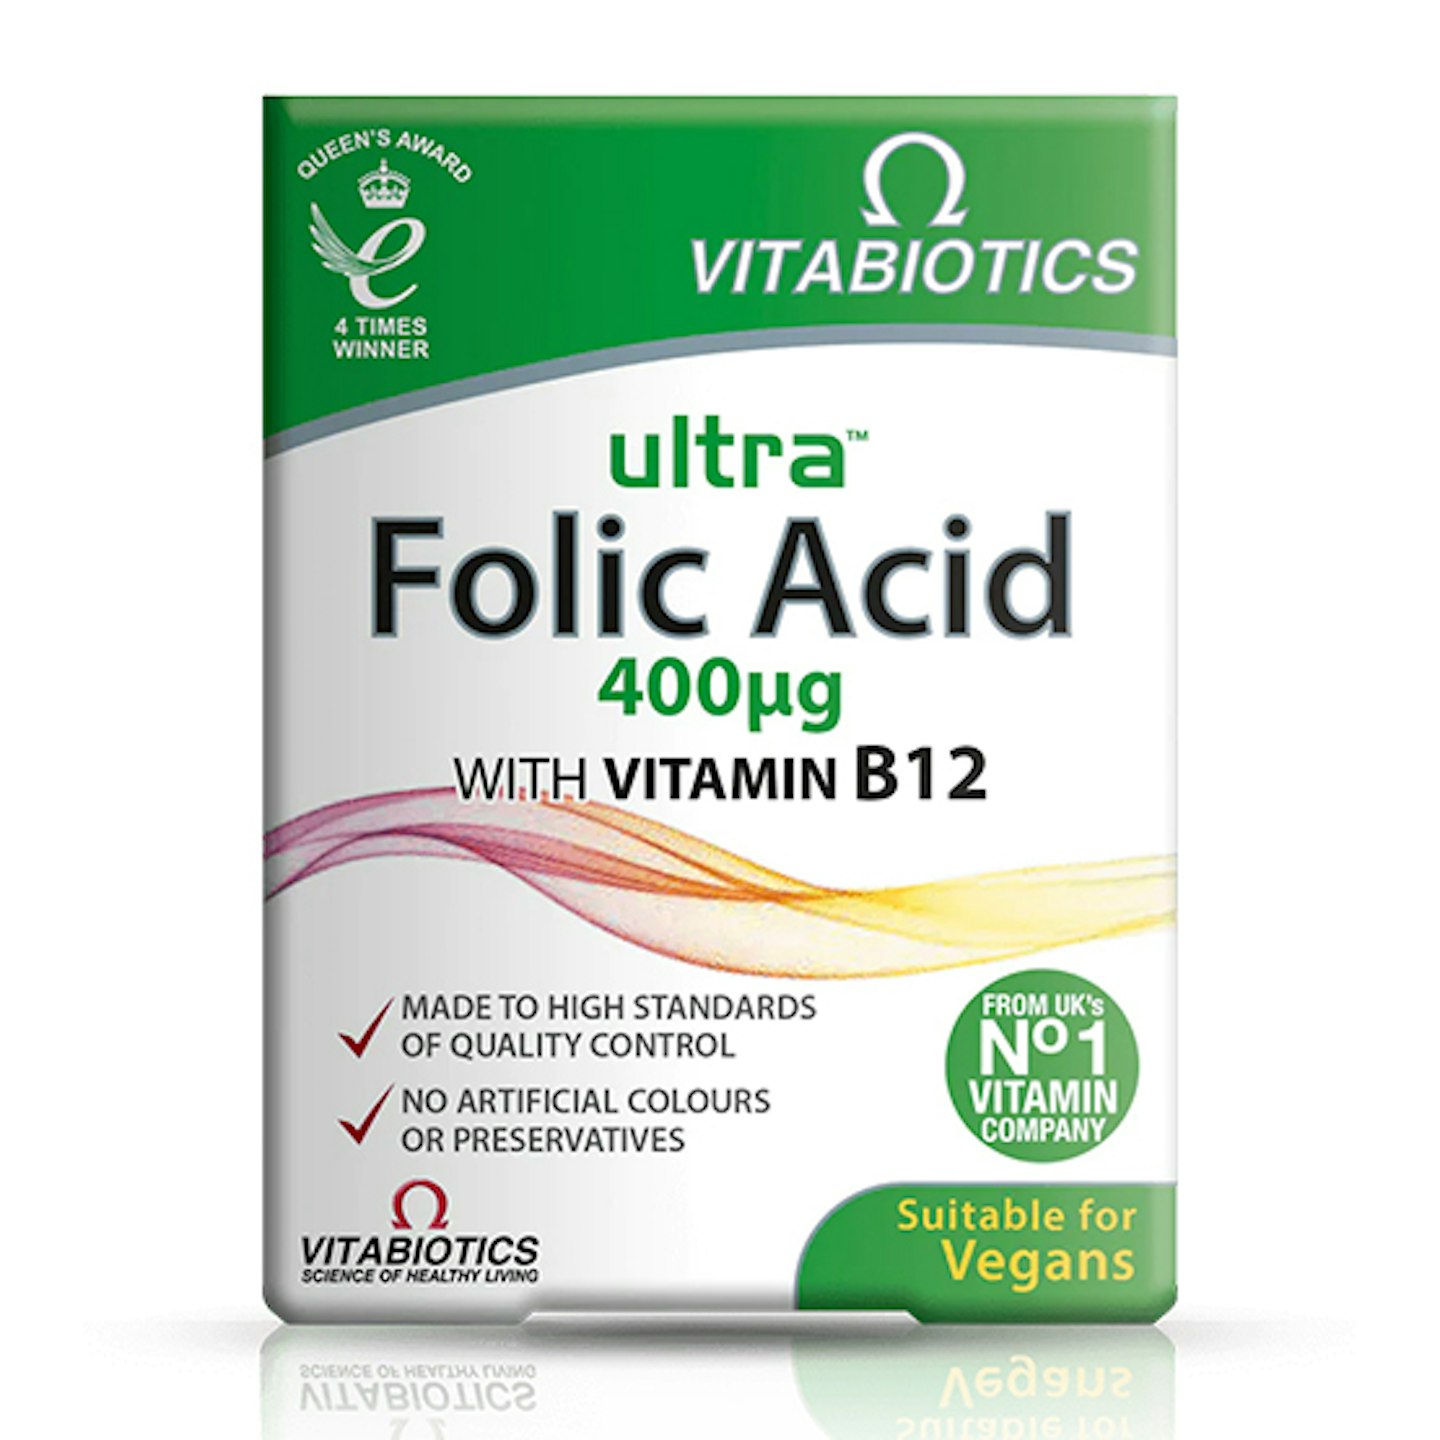 Folic acid supplements